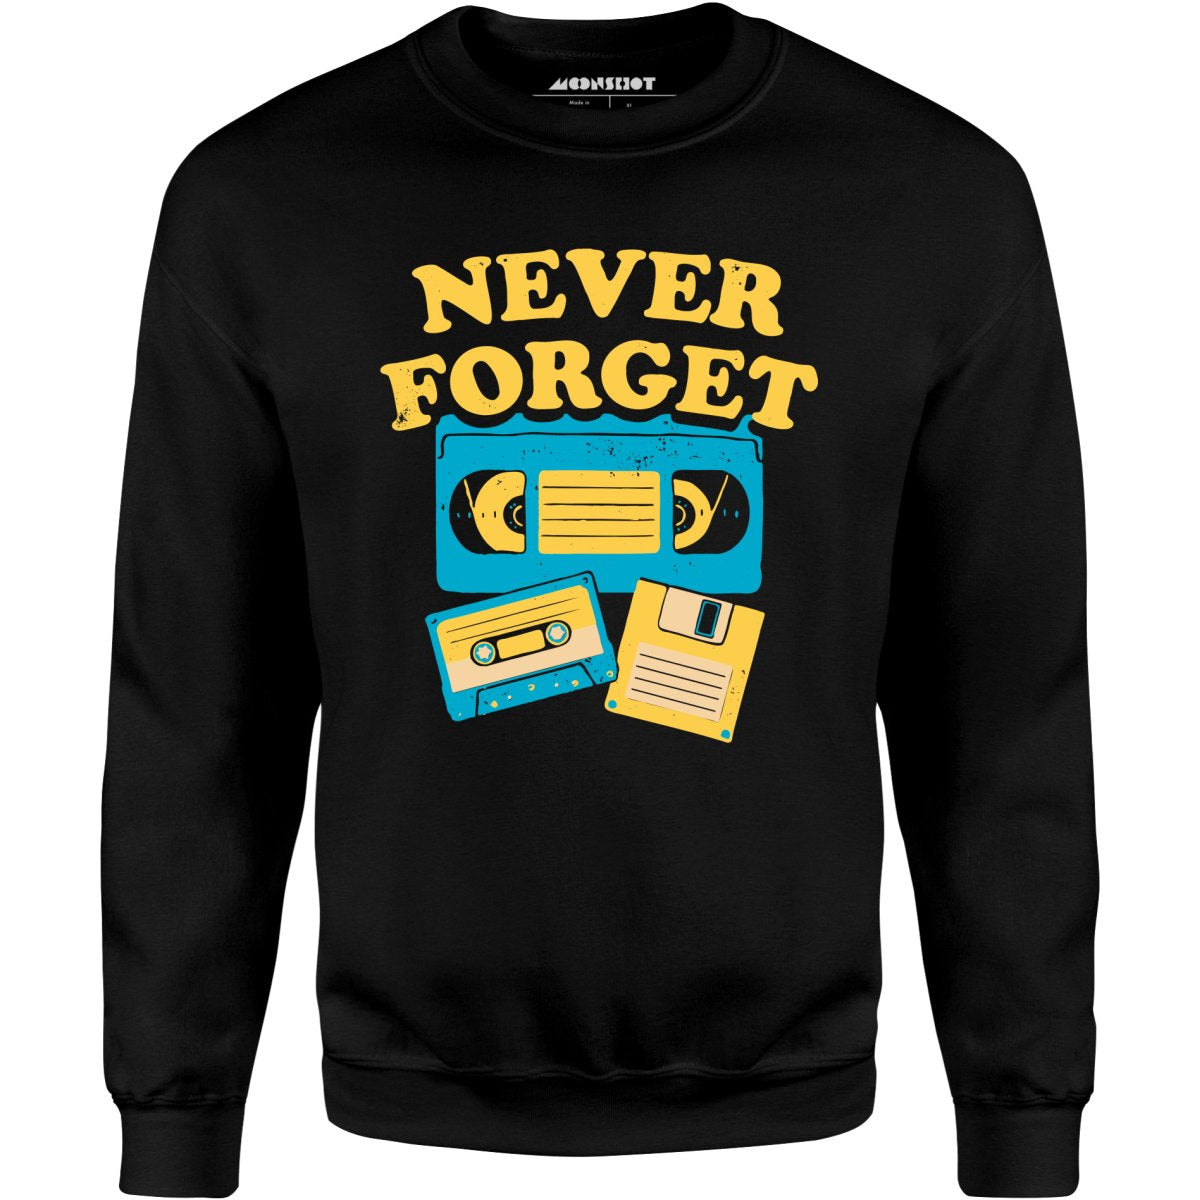 Never Forget - Unisex Sweatshirt